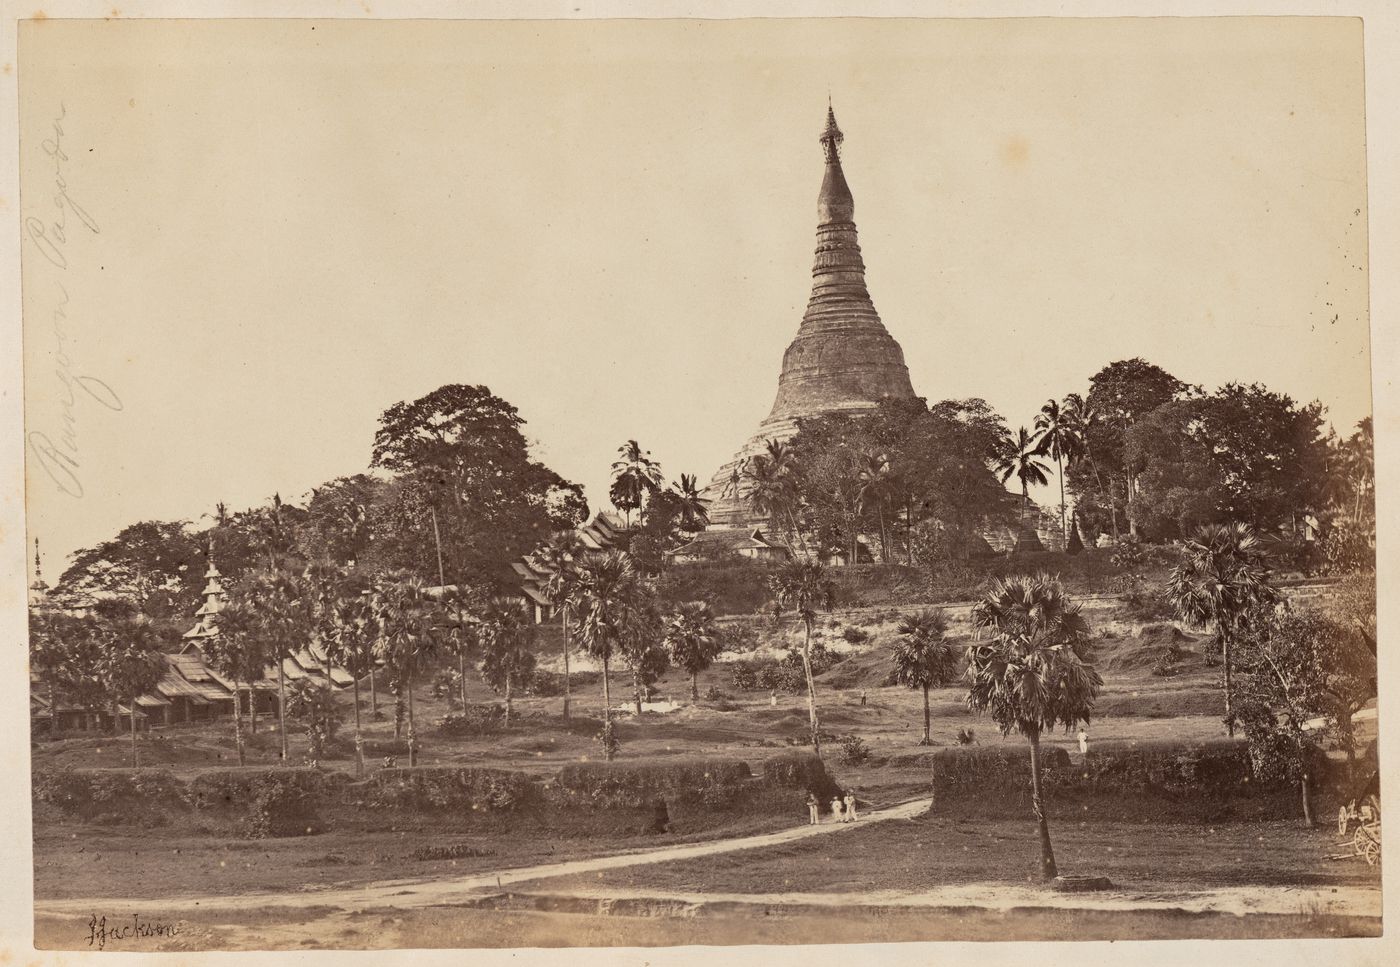 View of the Shwedagon Pagoda with trees in the foreground, Rangoon (now Yangon), Burma (now Myanmar)